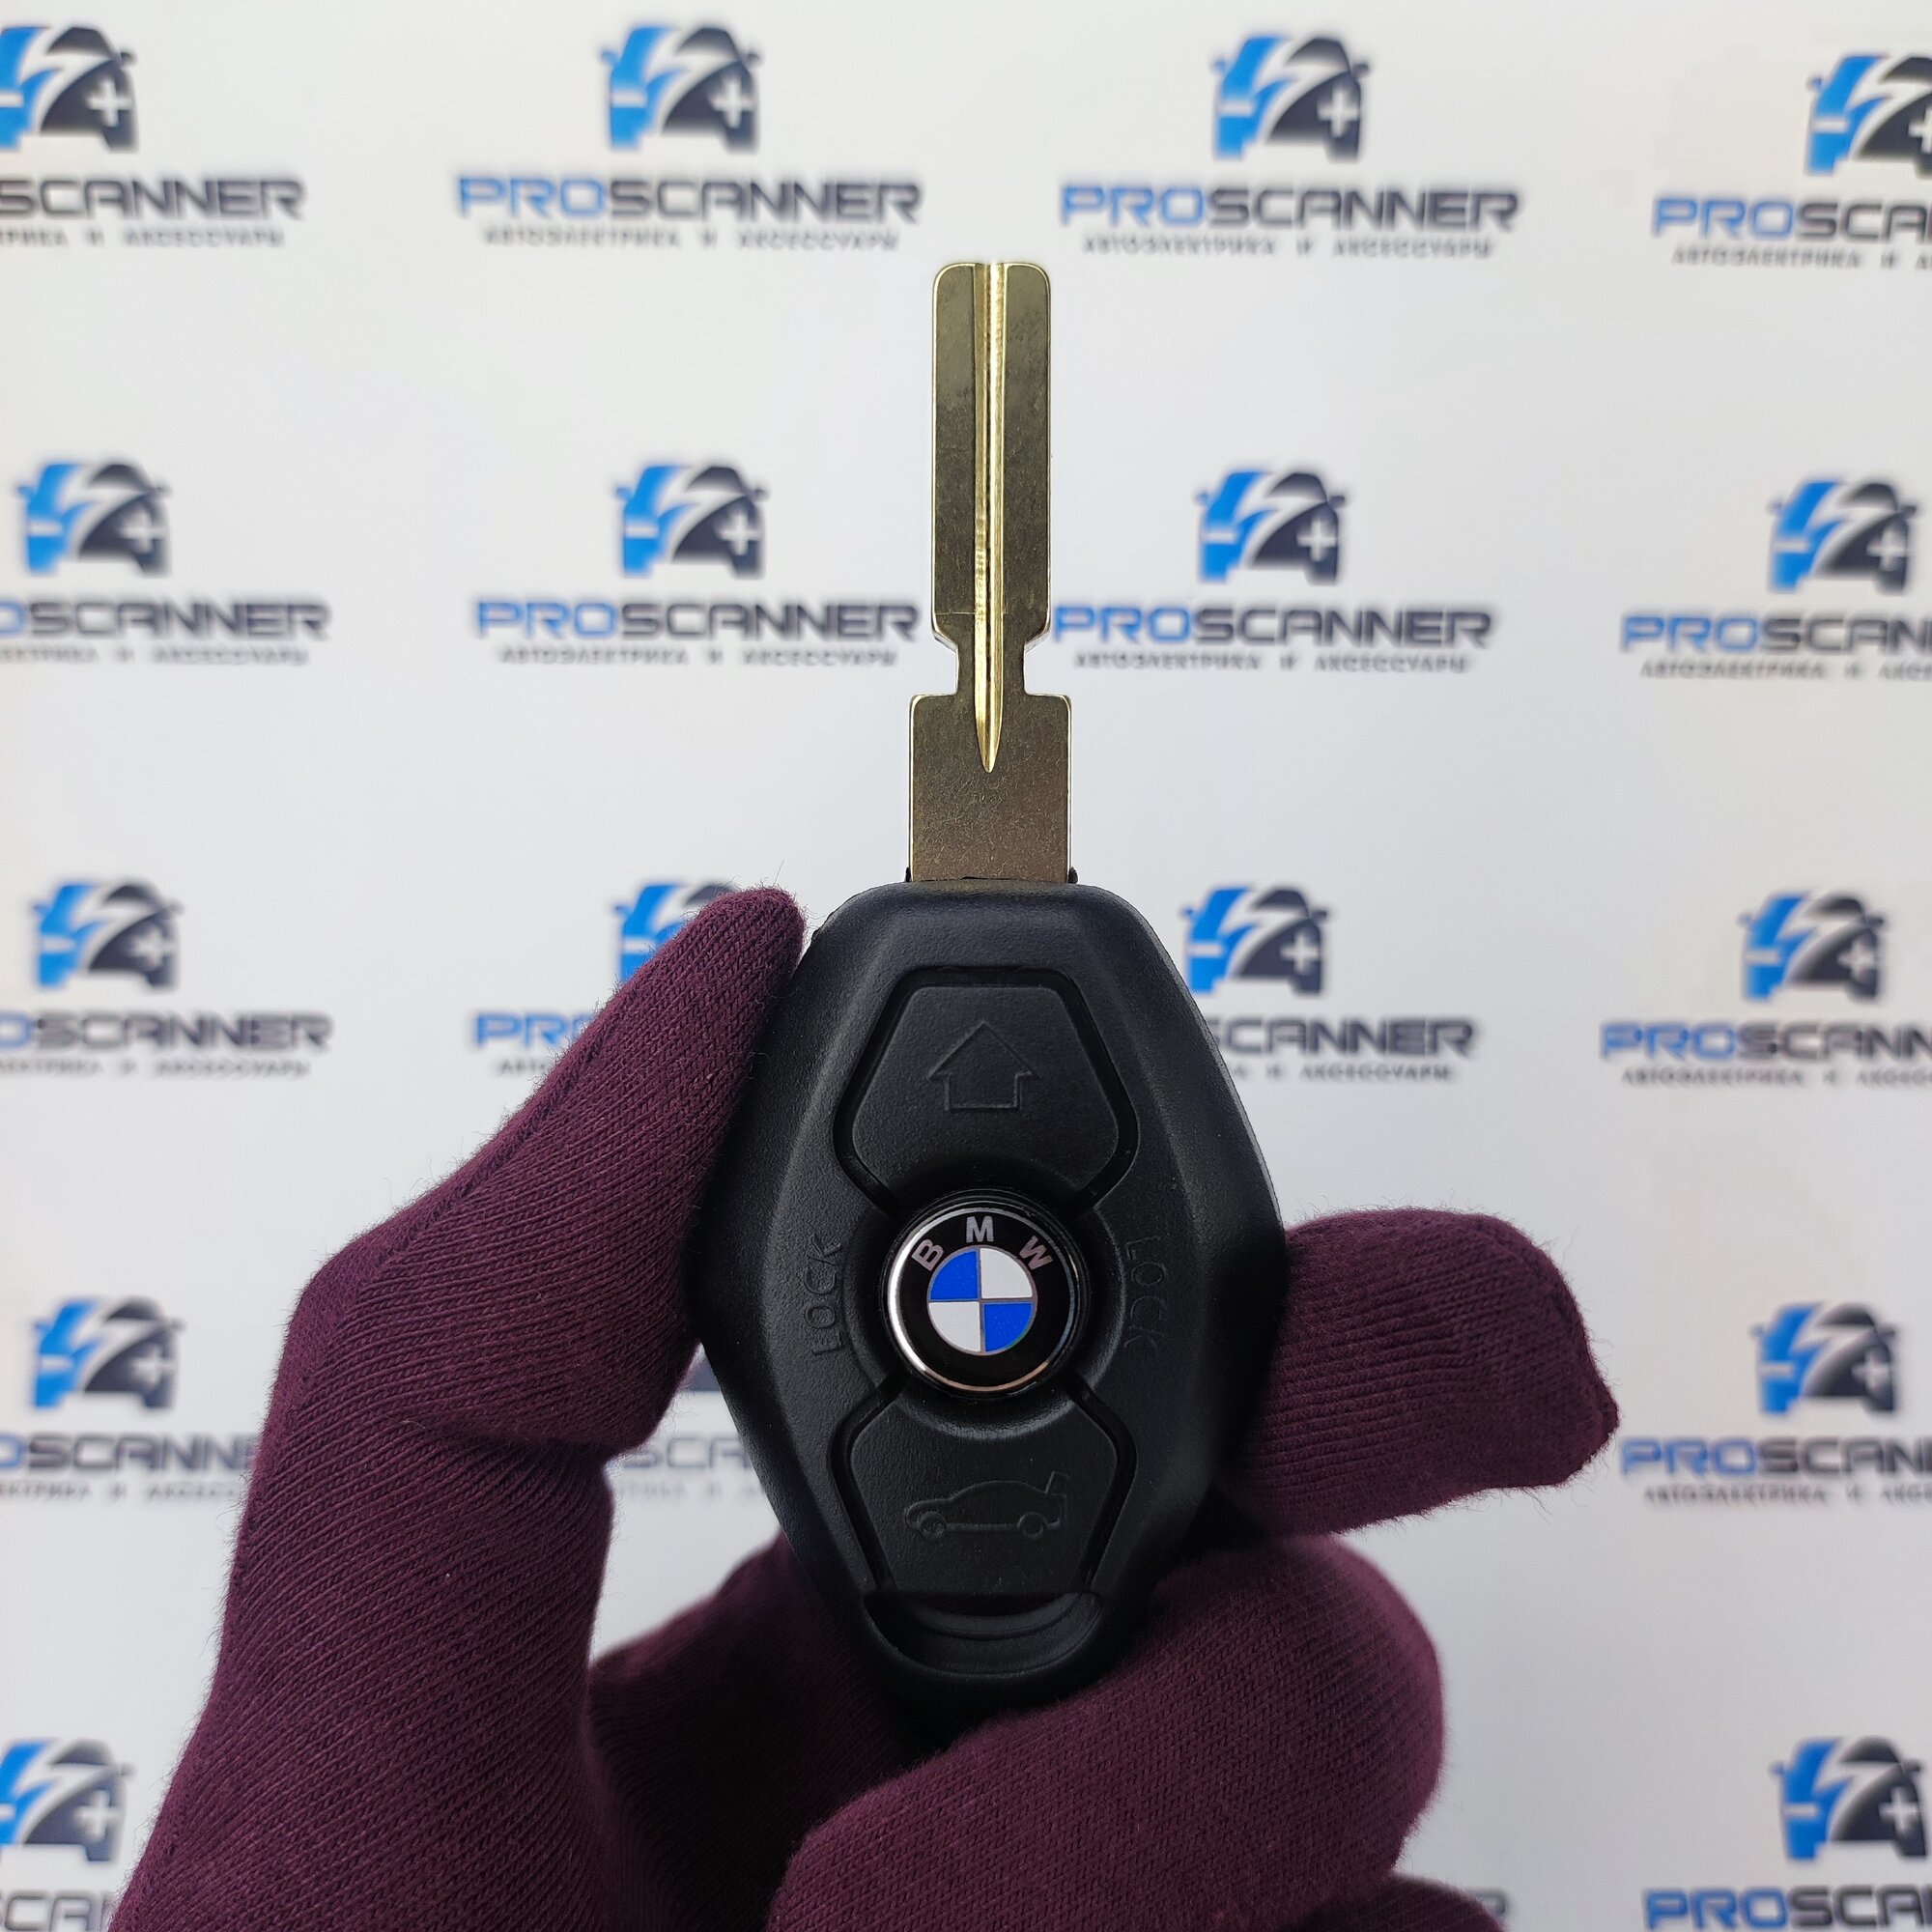 Корпус ключа зажигания зажигания для БМВ BMW E серии E53 E39 E46 E60 E65 X3 X5 M5 - 1 штука (3х кнопочный ключ лезвие HU58)